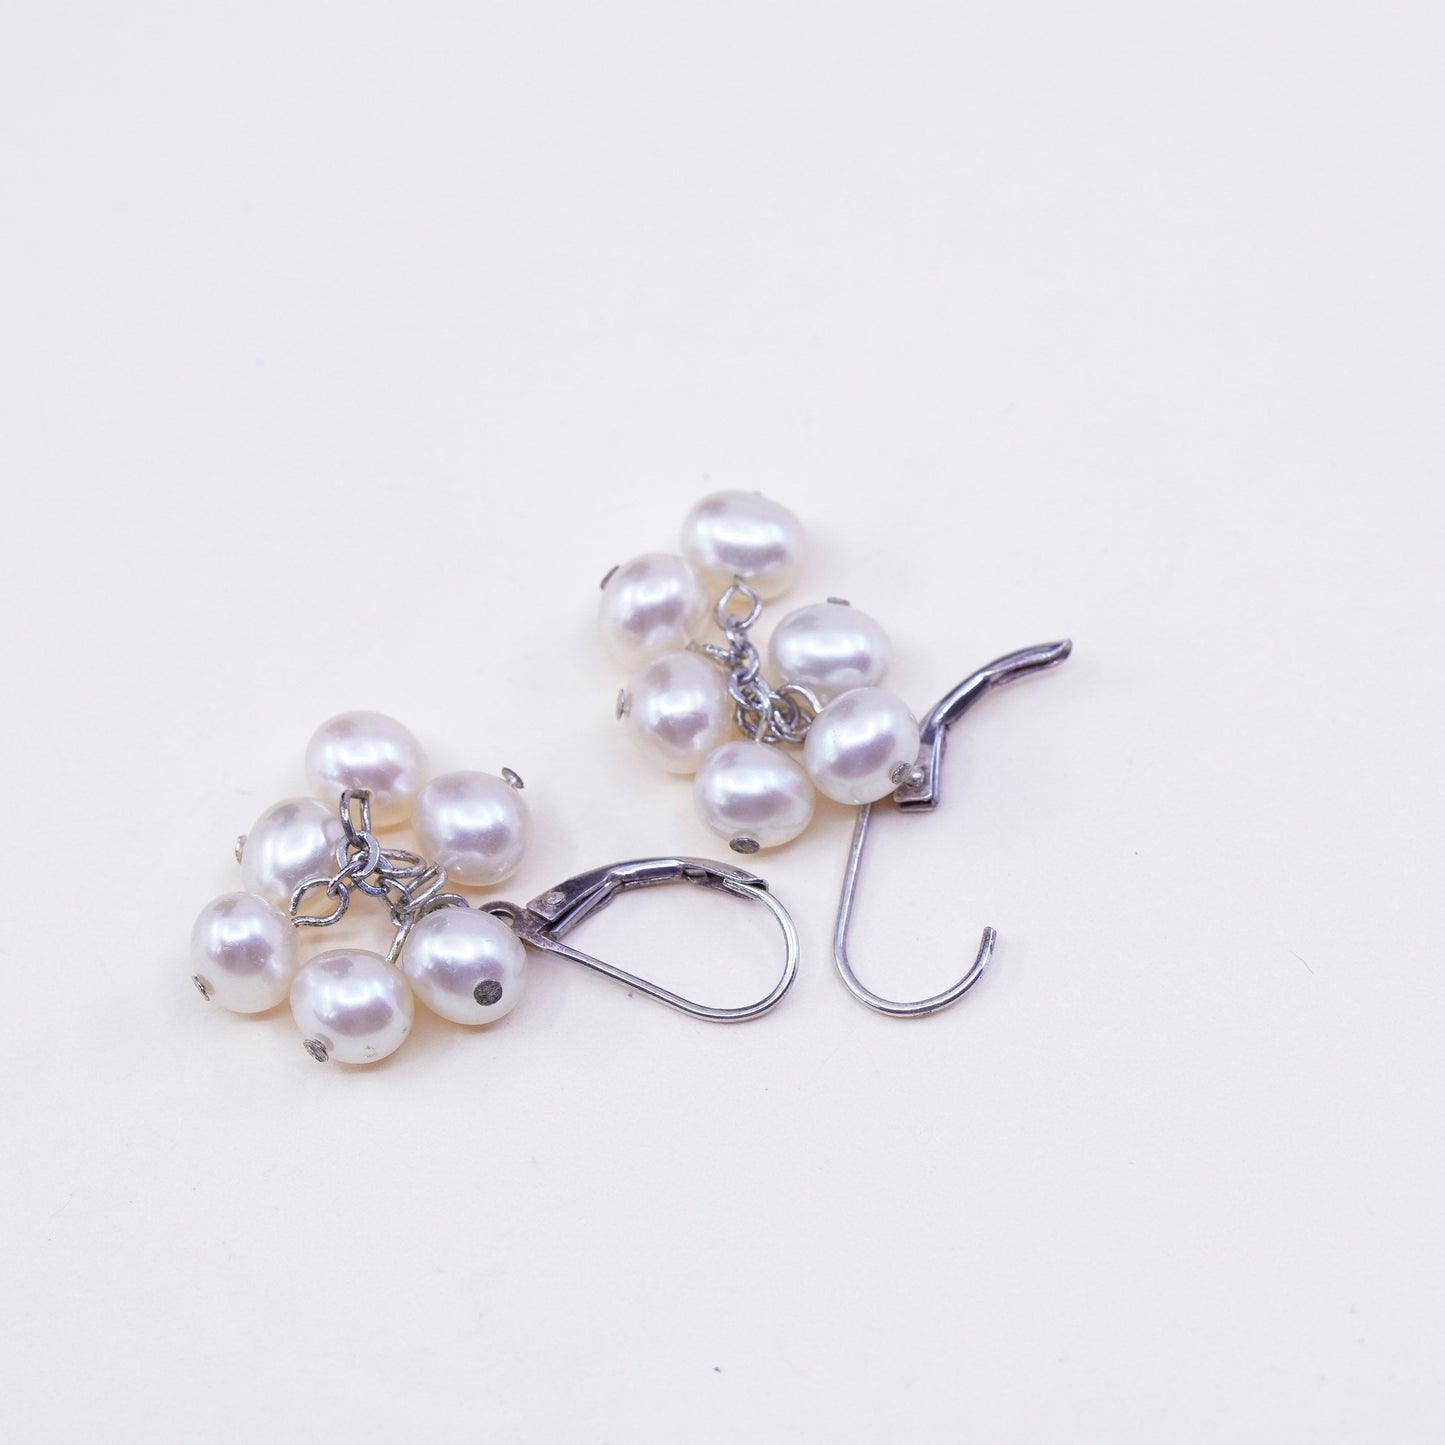 Vintage Sterling 925 silver handmade earrings with cluster pearl